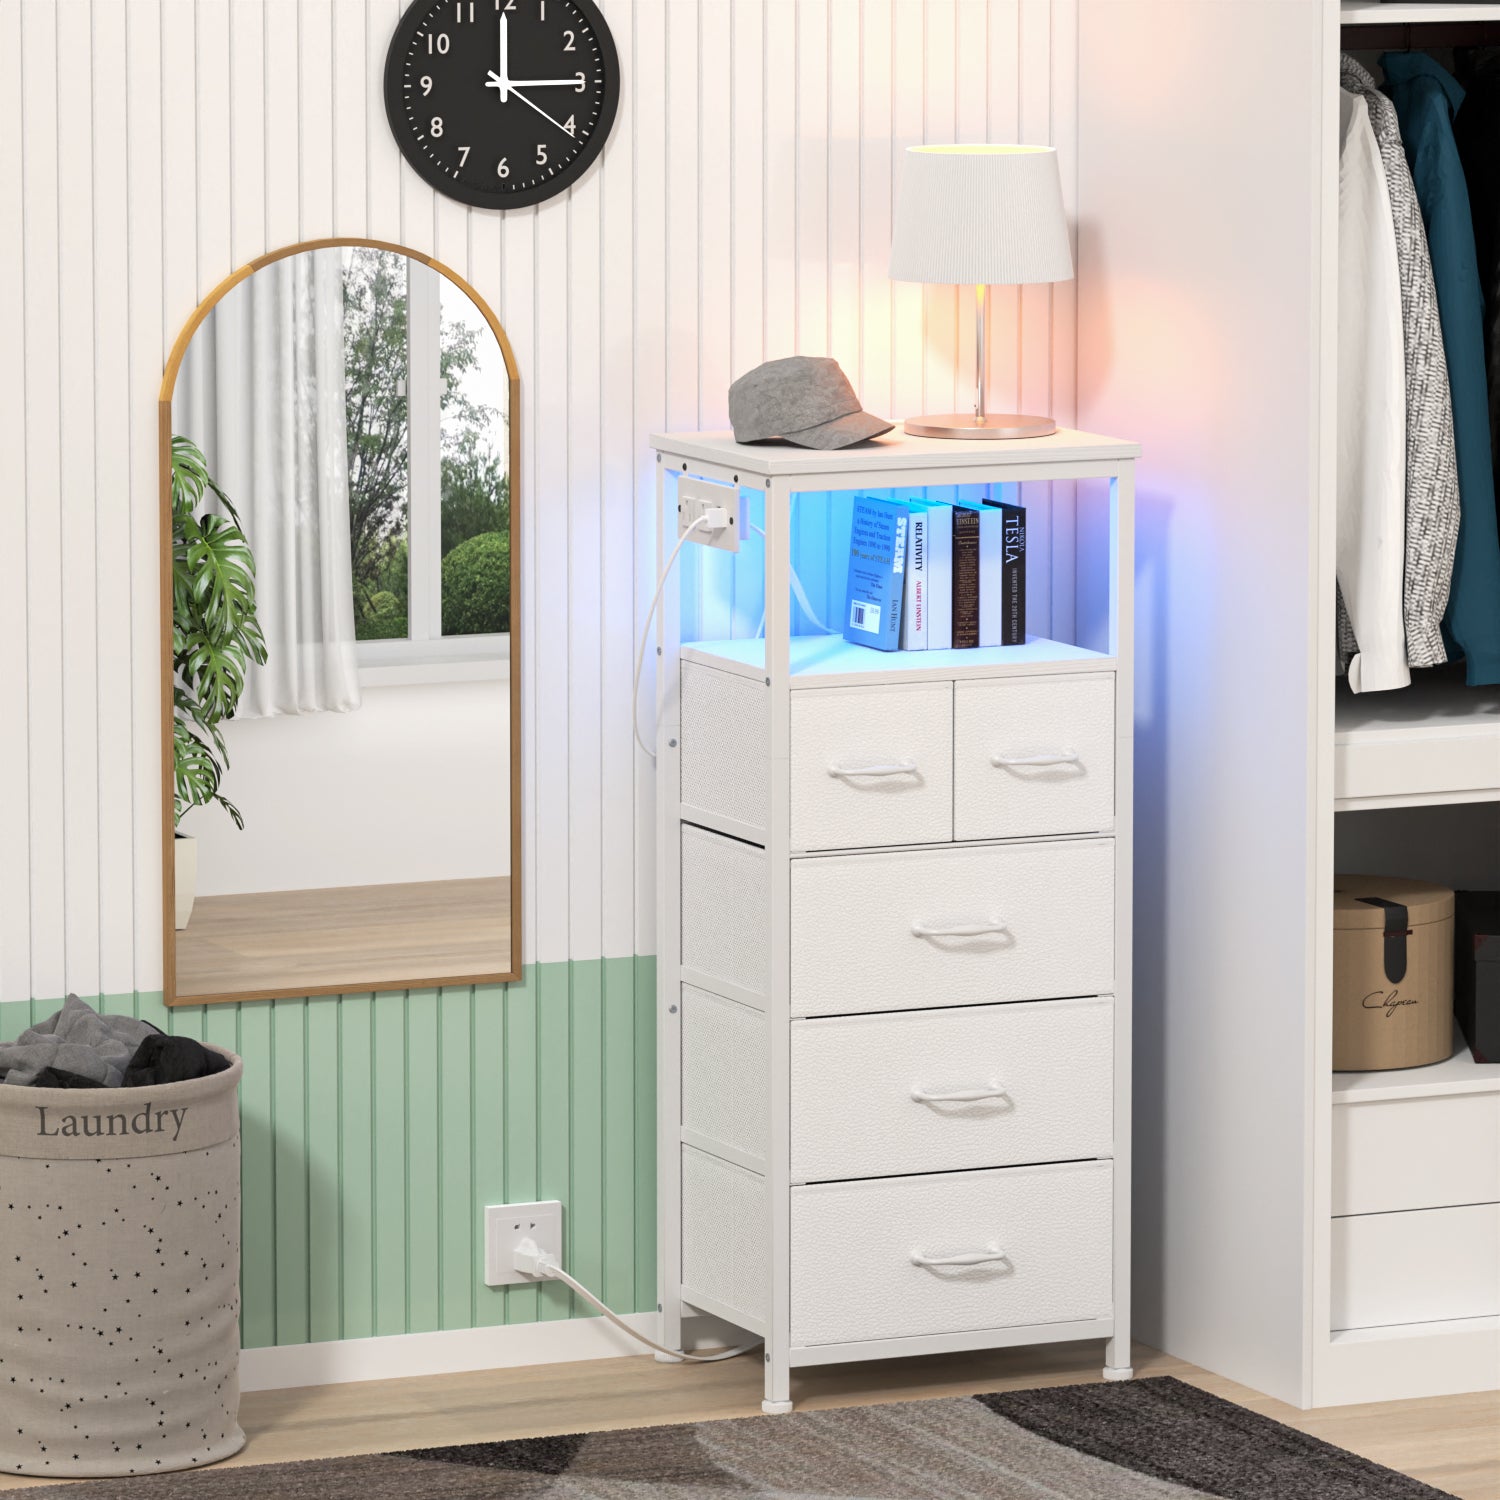 Furnulem Tall LED Dresser with Charging Station